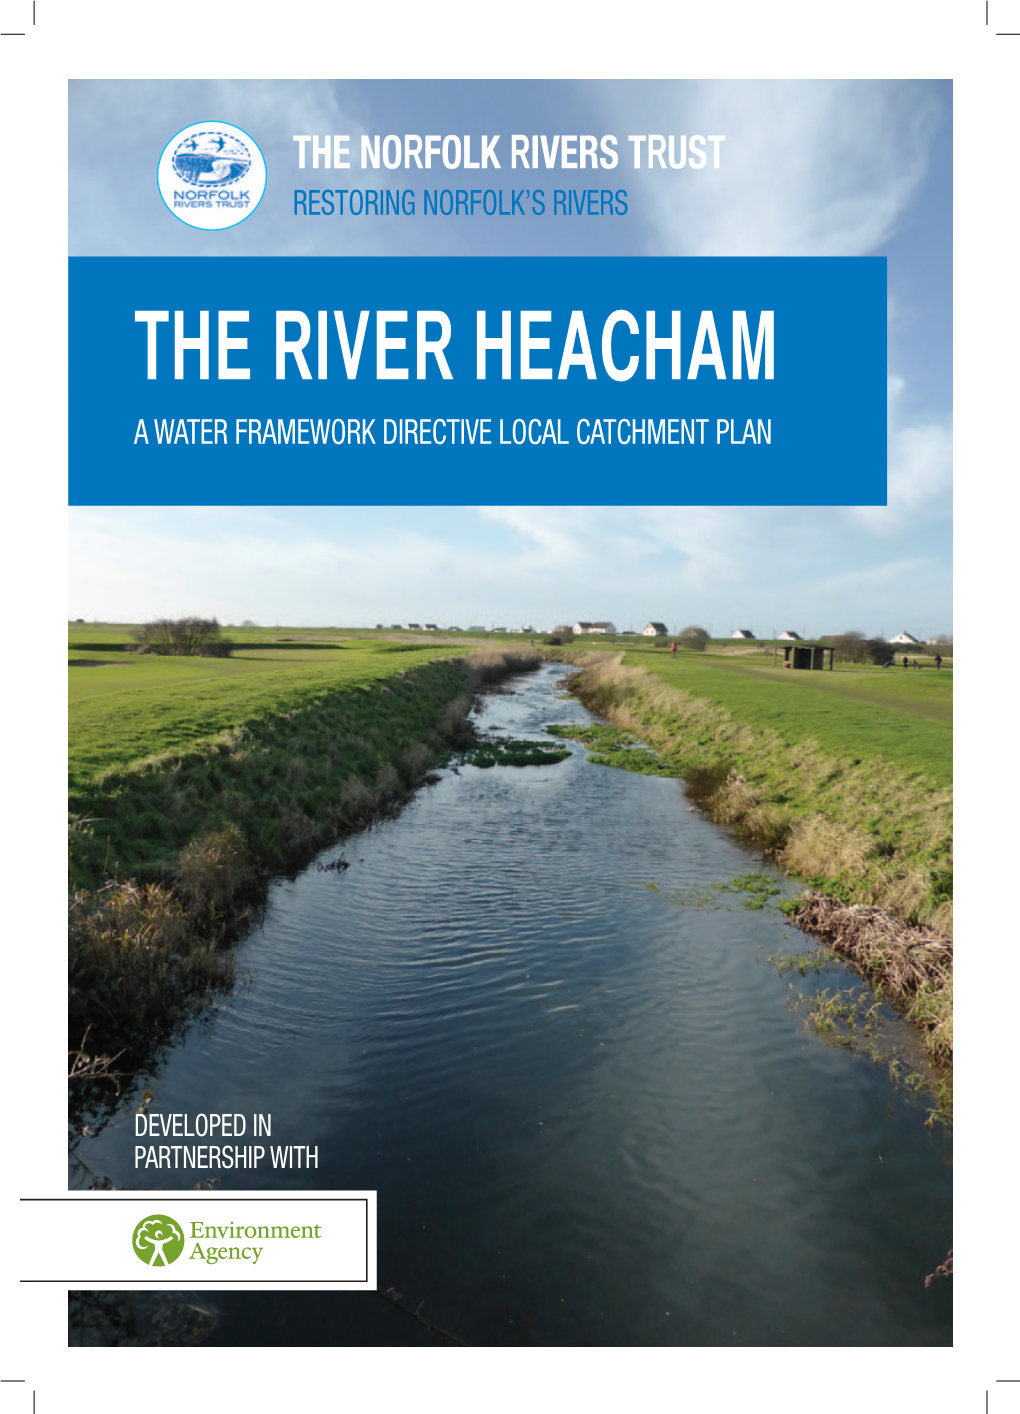 The River Heacham a Water Framework Directive Local Catchment Plan